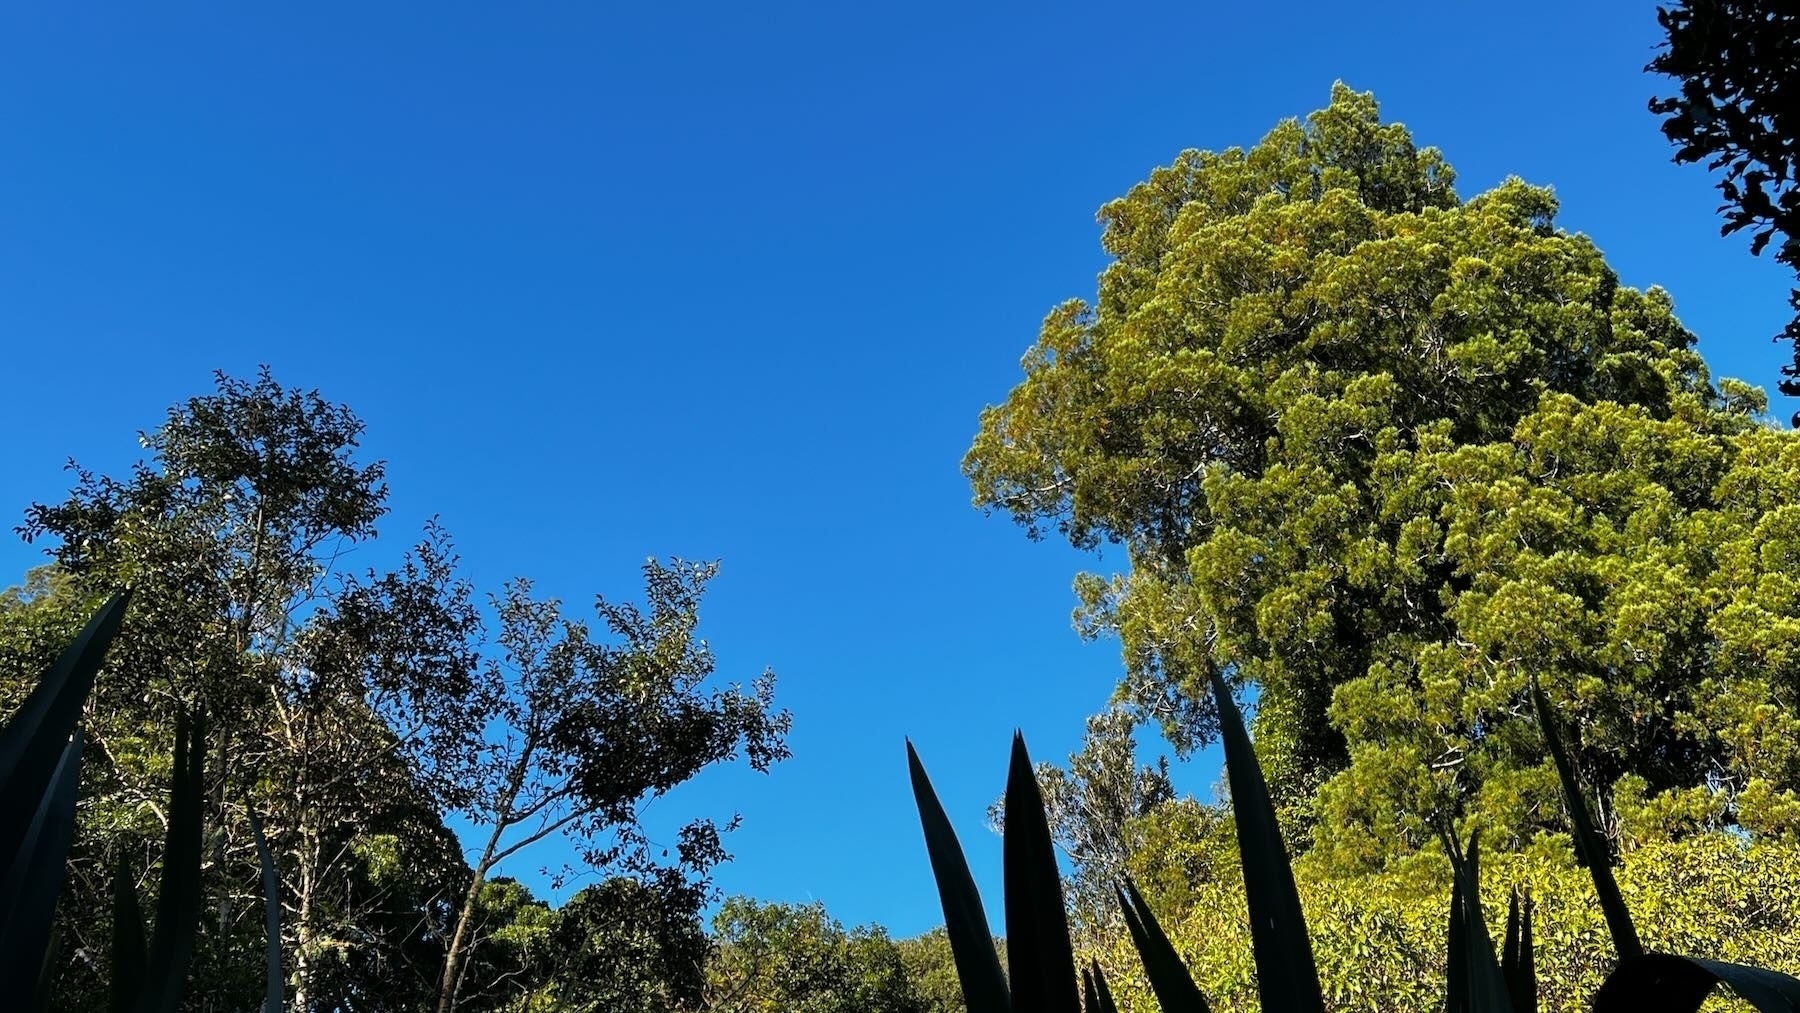 Tree tops against a deep blue sky.